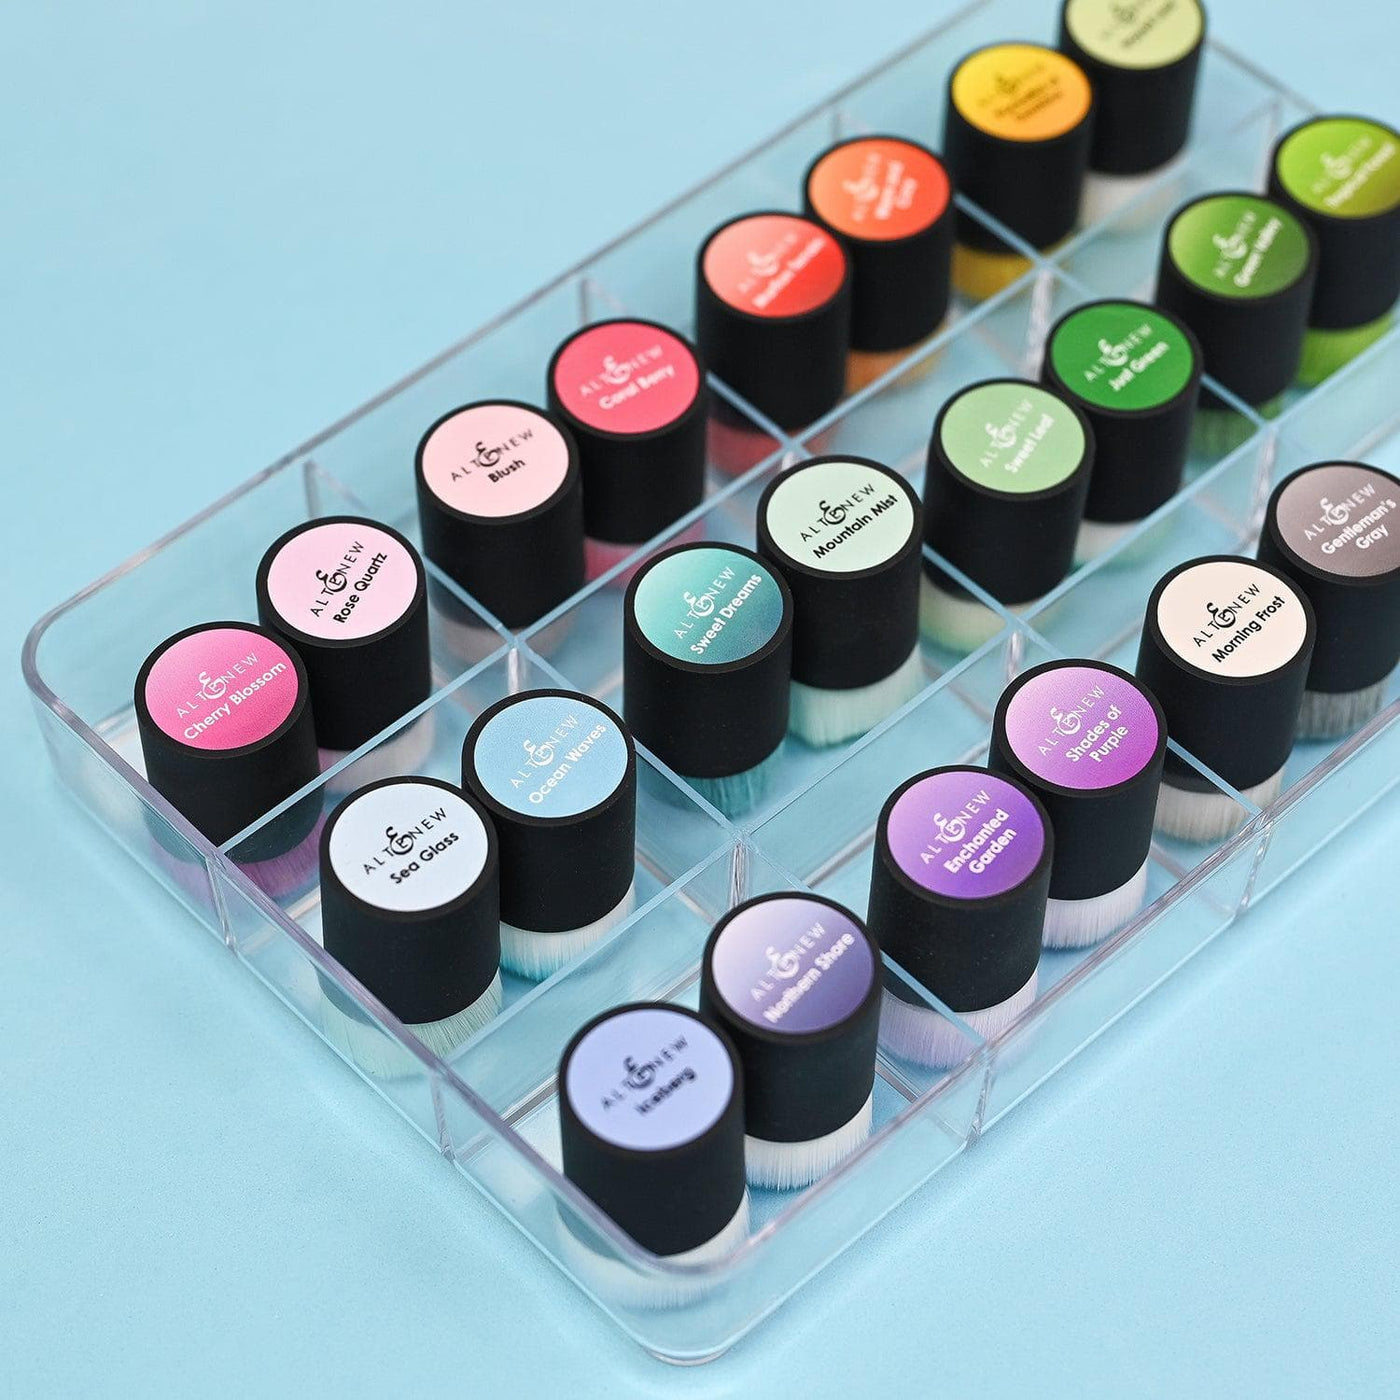 Misil Craft Decals Small Ink Blending Brush Label Set - All Crisp Dye Ink Colors (4 Sheets)